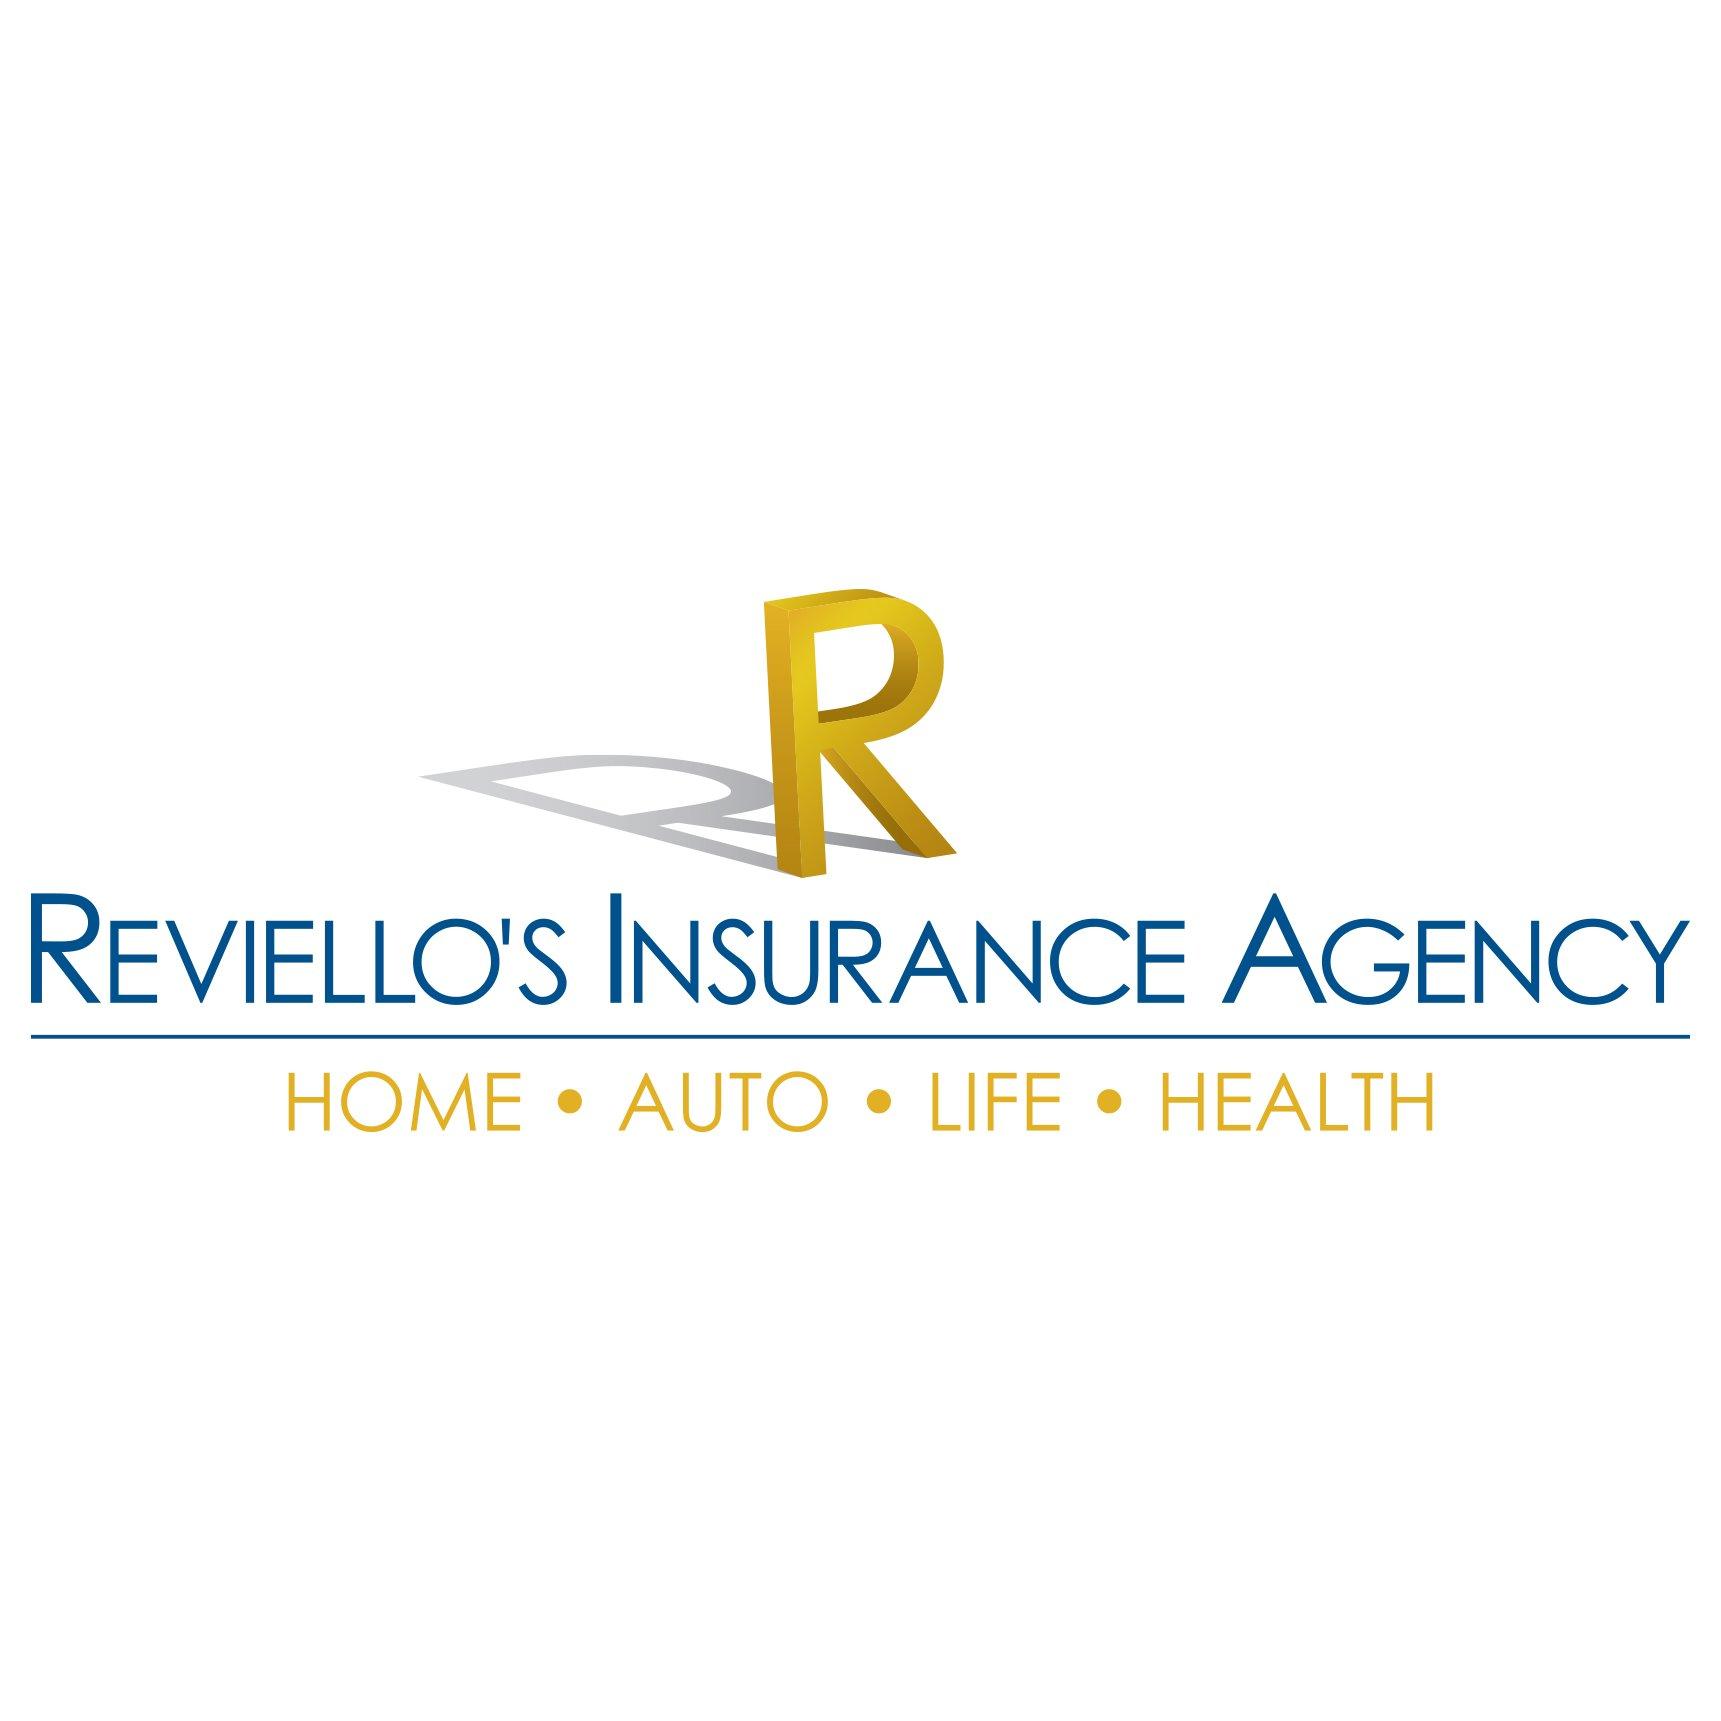 Reviello's Insurance Agency